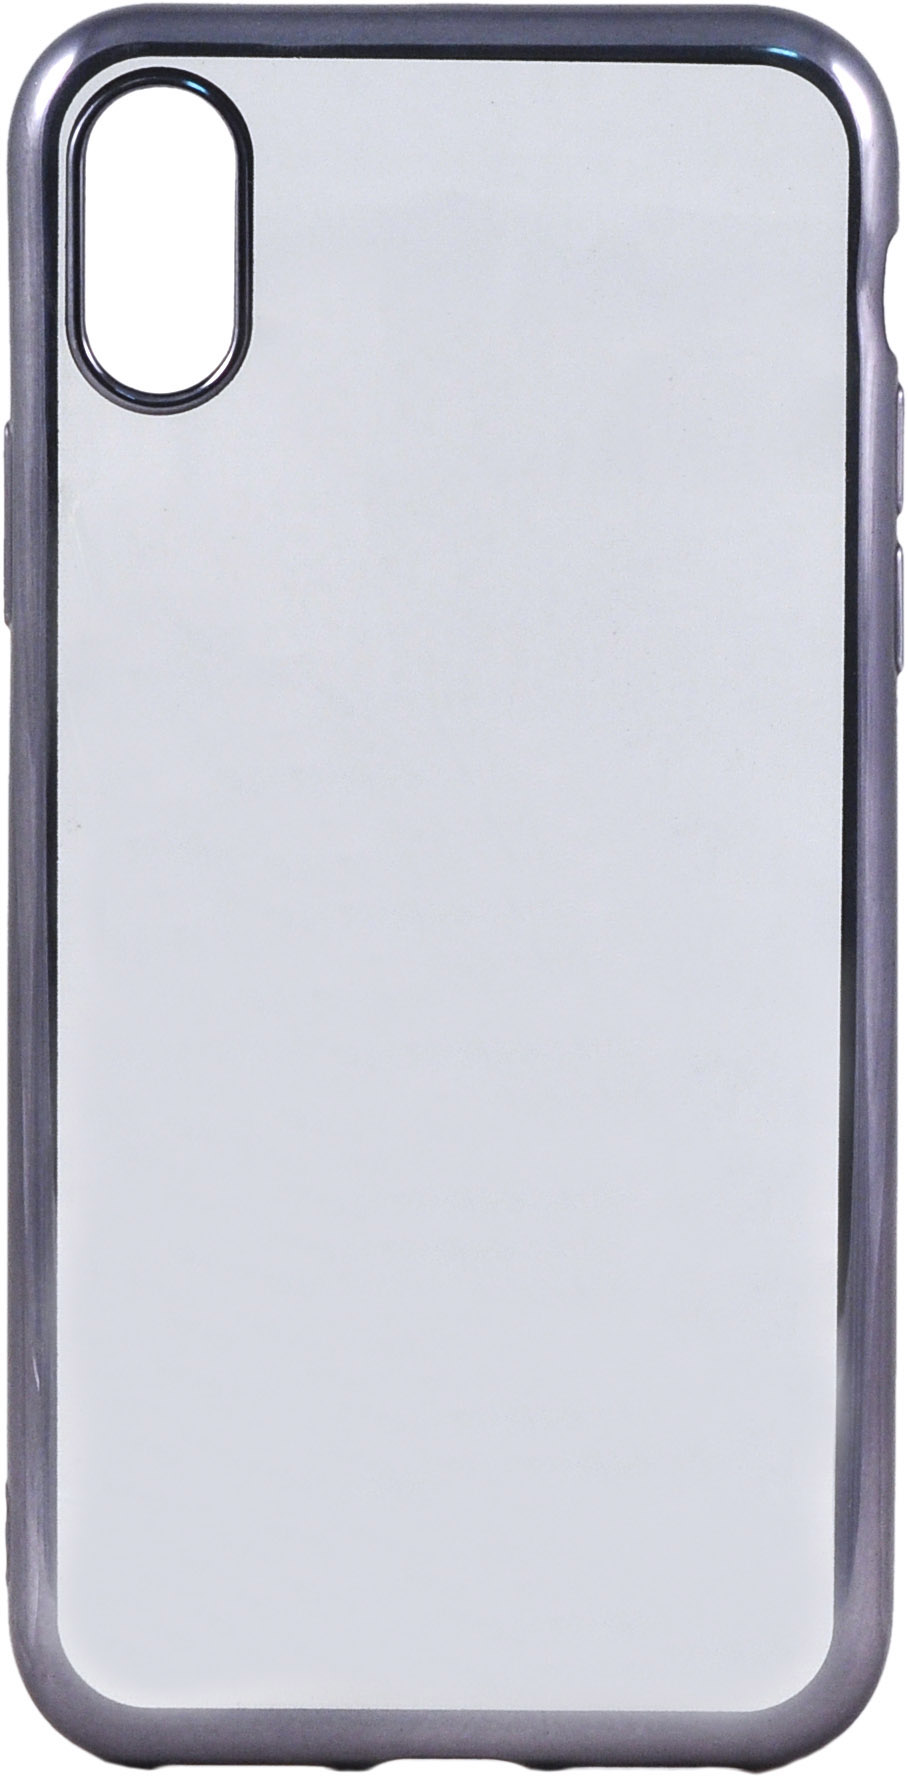 Чехол HANDY Shiny (electroplated) для Айфон X Grey